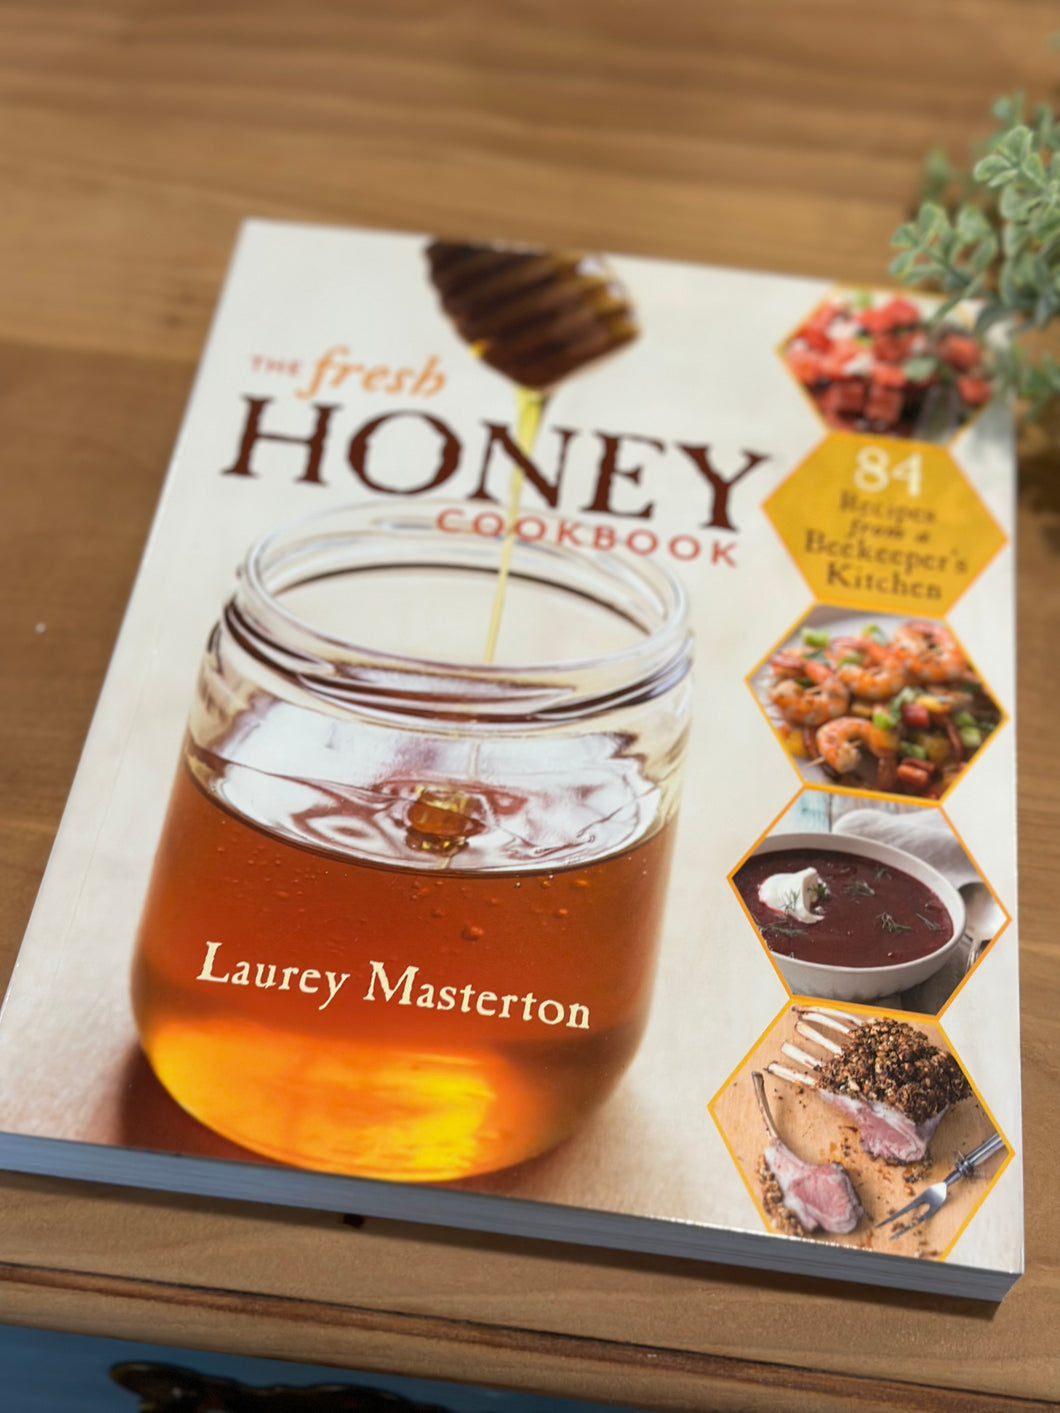 Fresh Honey Cookbook